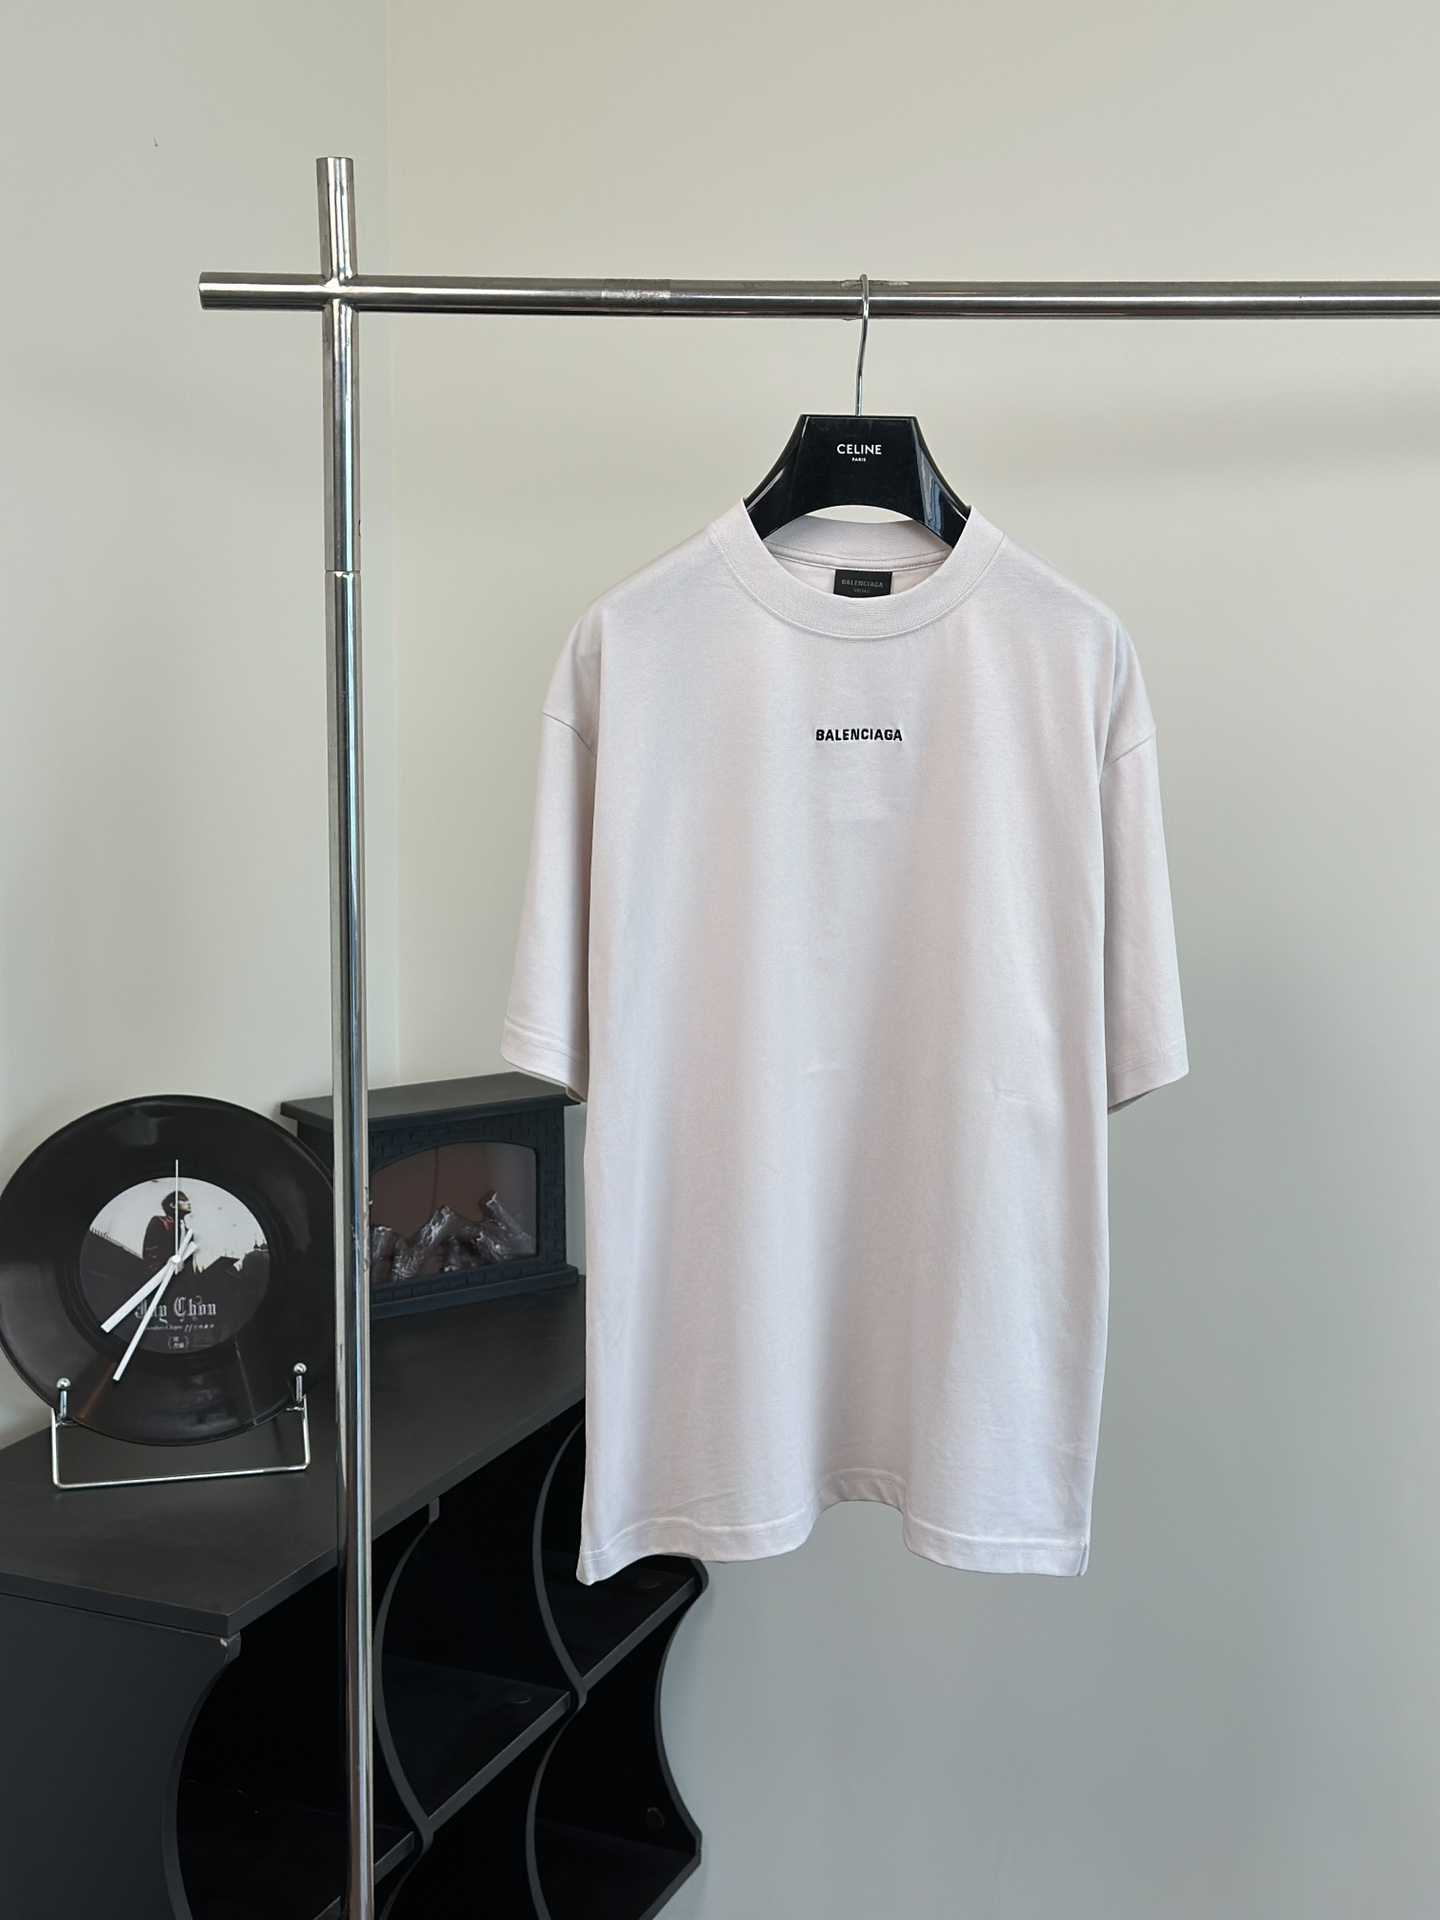 Balenciaga Clothing T-Shirt Embroidery Cotton Short Sleeve